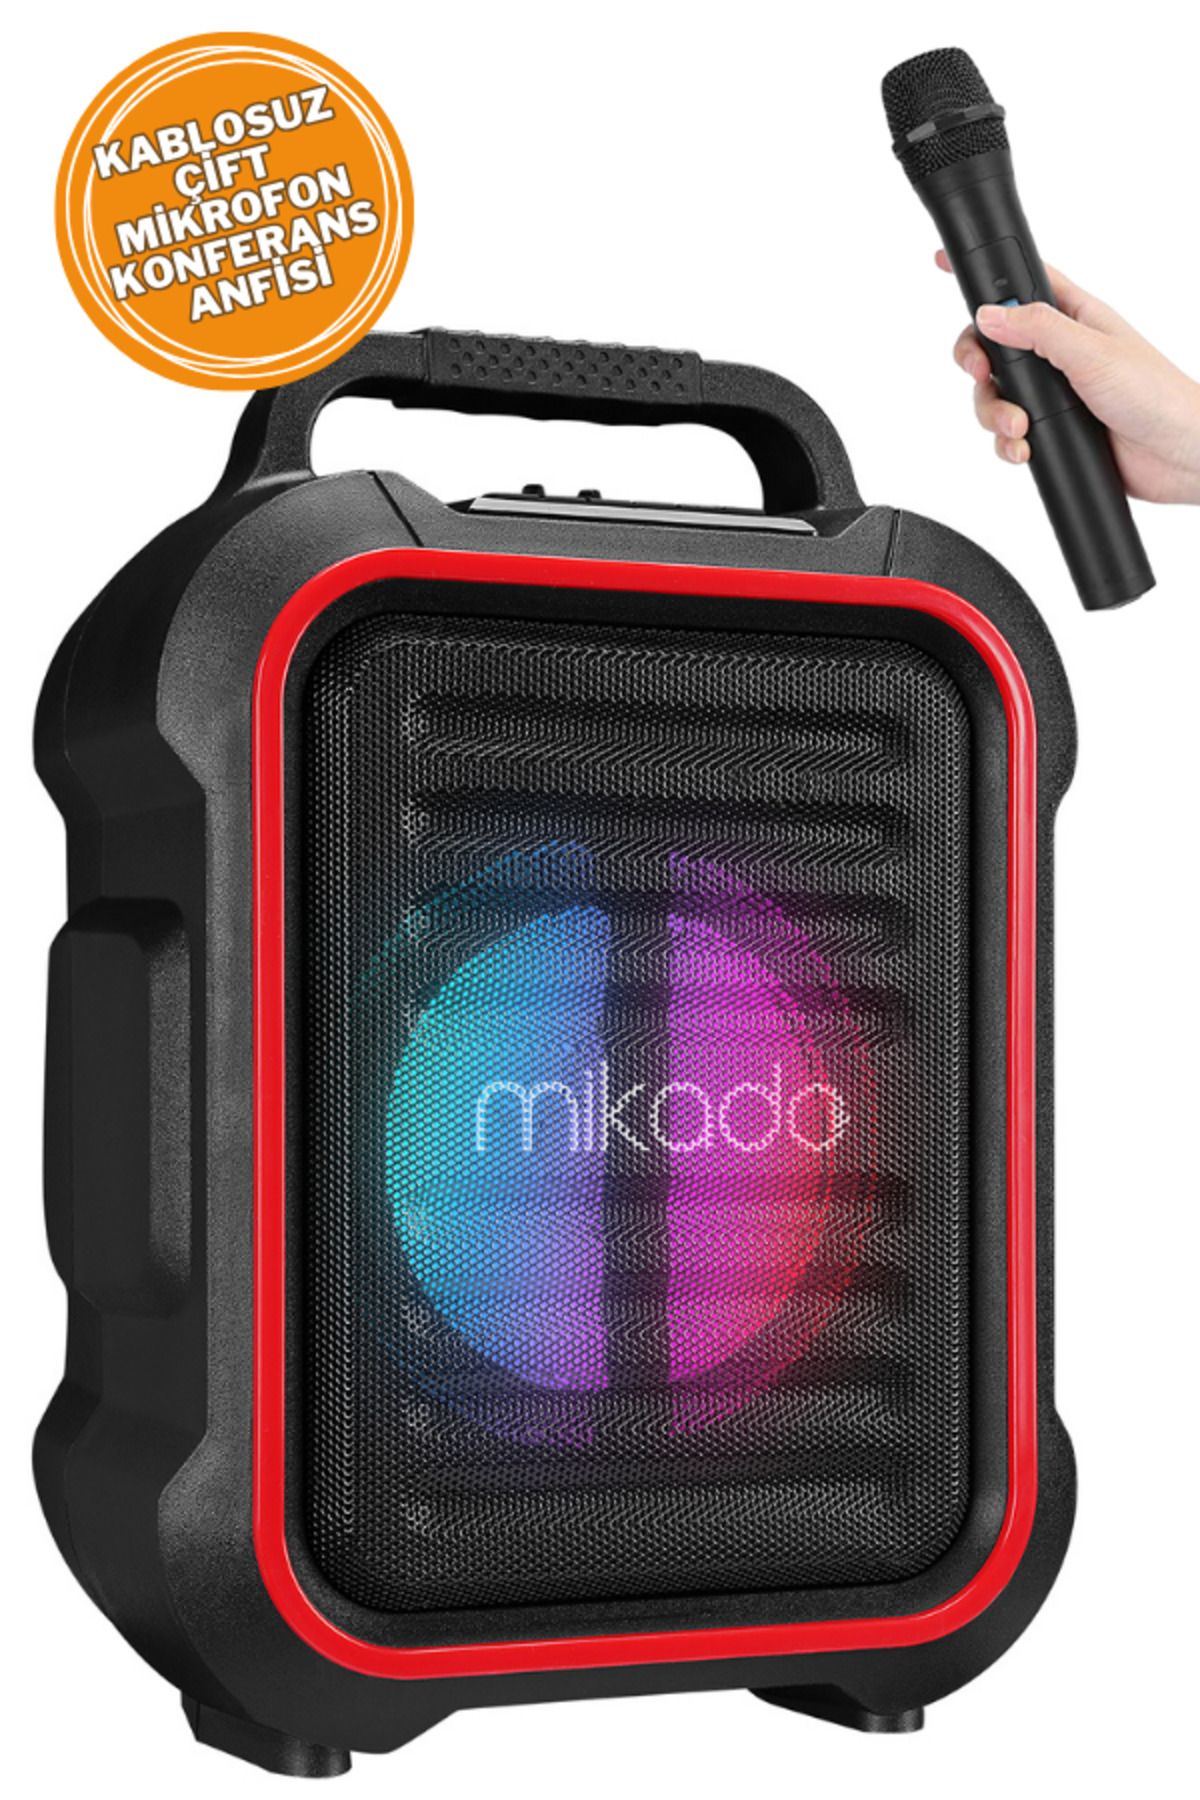 Mikado 15W El ve Kafa Mikrofonlu USB/SD Bluetoothlu Toplantı-Parti Hoparlör Taşınabilir Taziye Hoparlörü